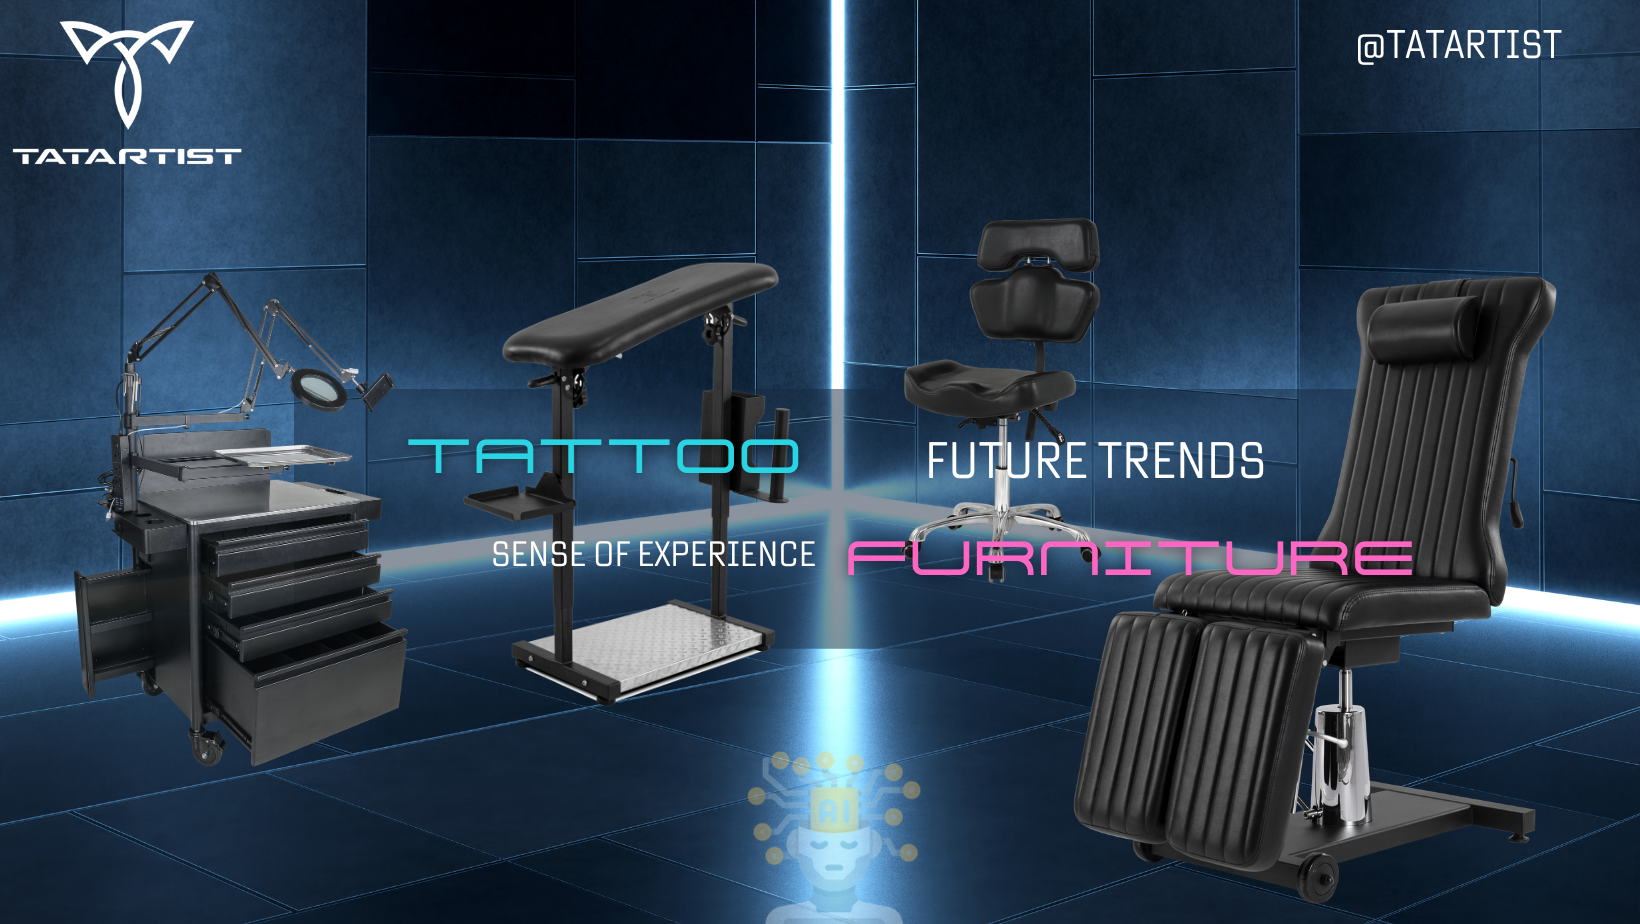 Focus on user tattoo experience-TATARTIST